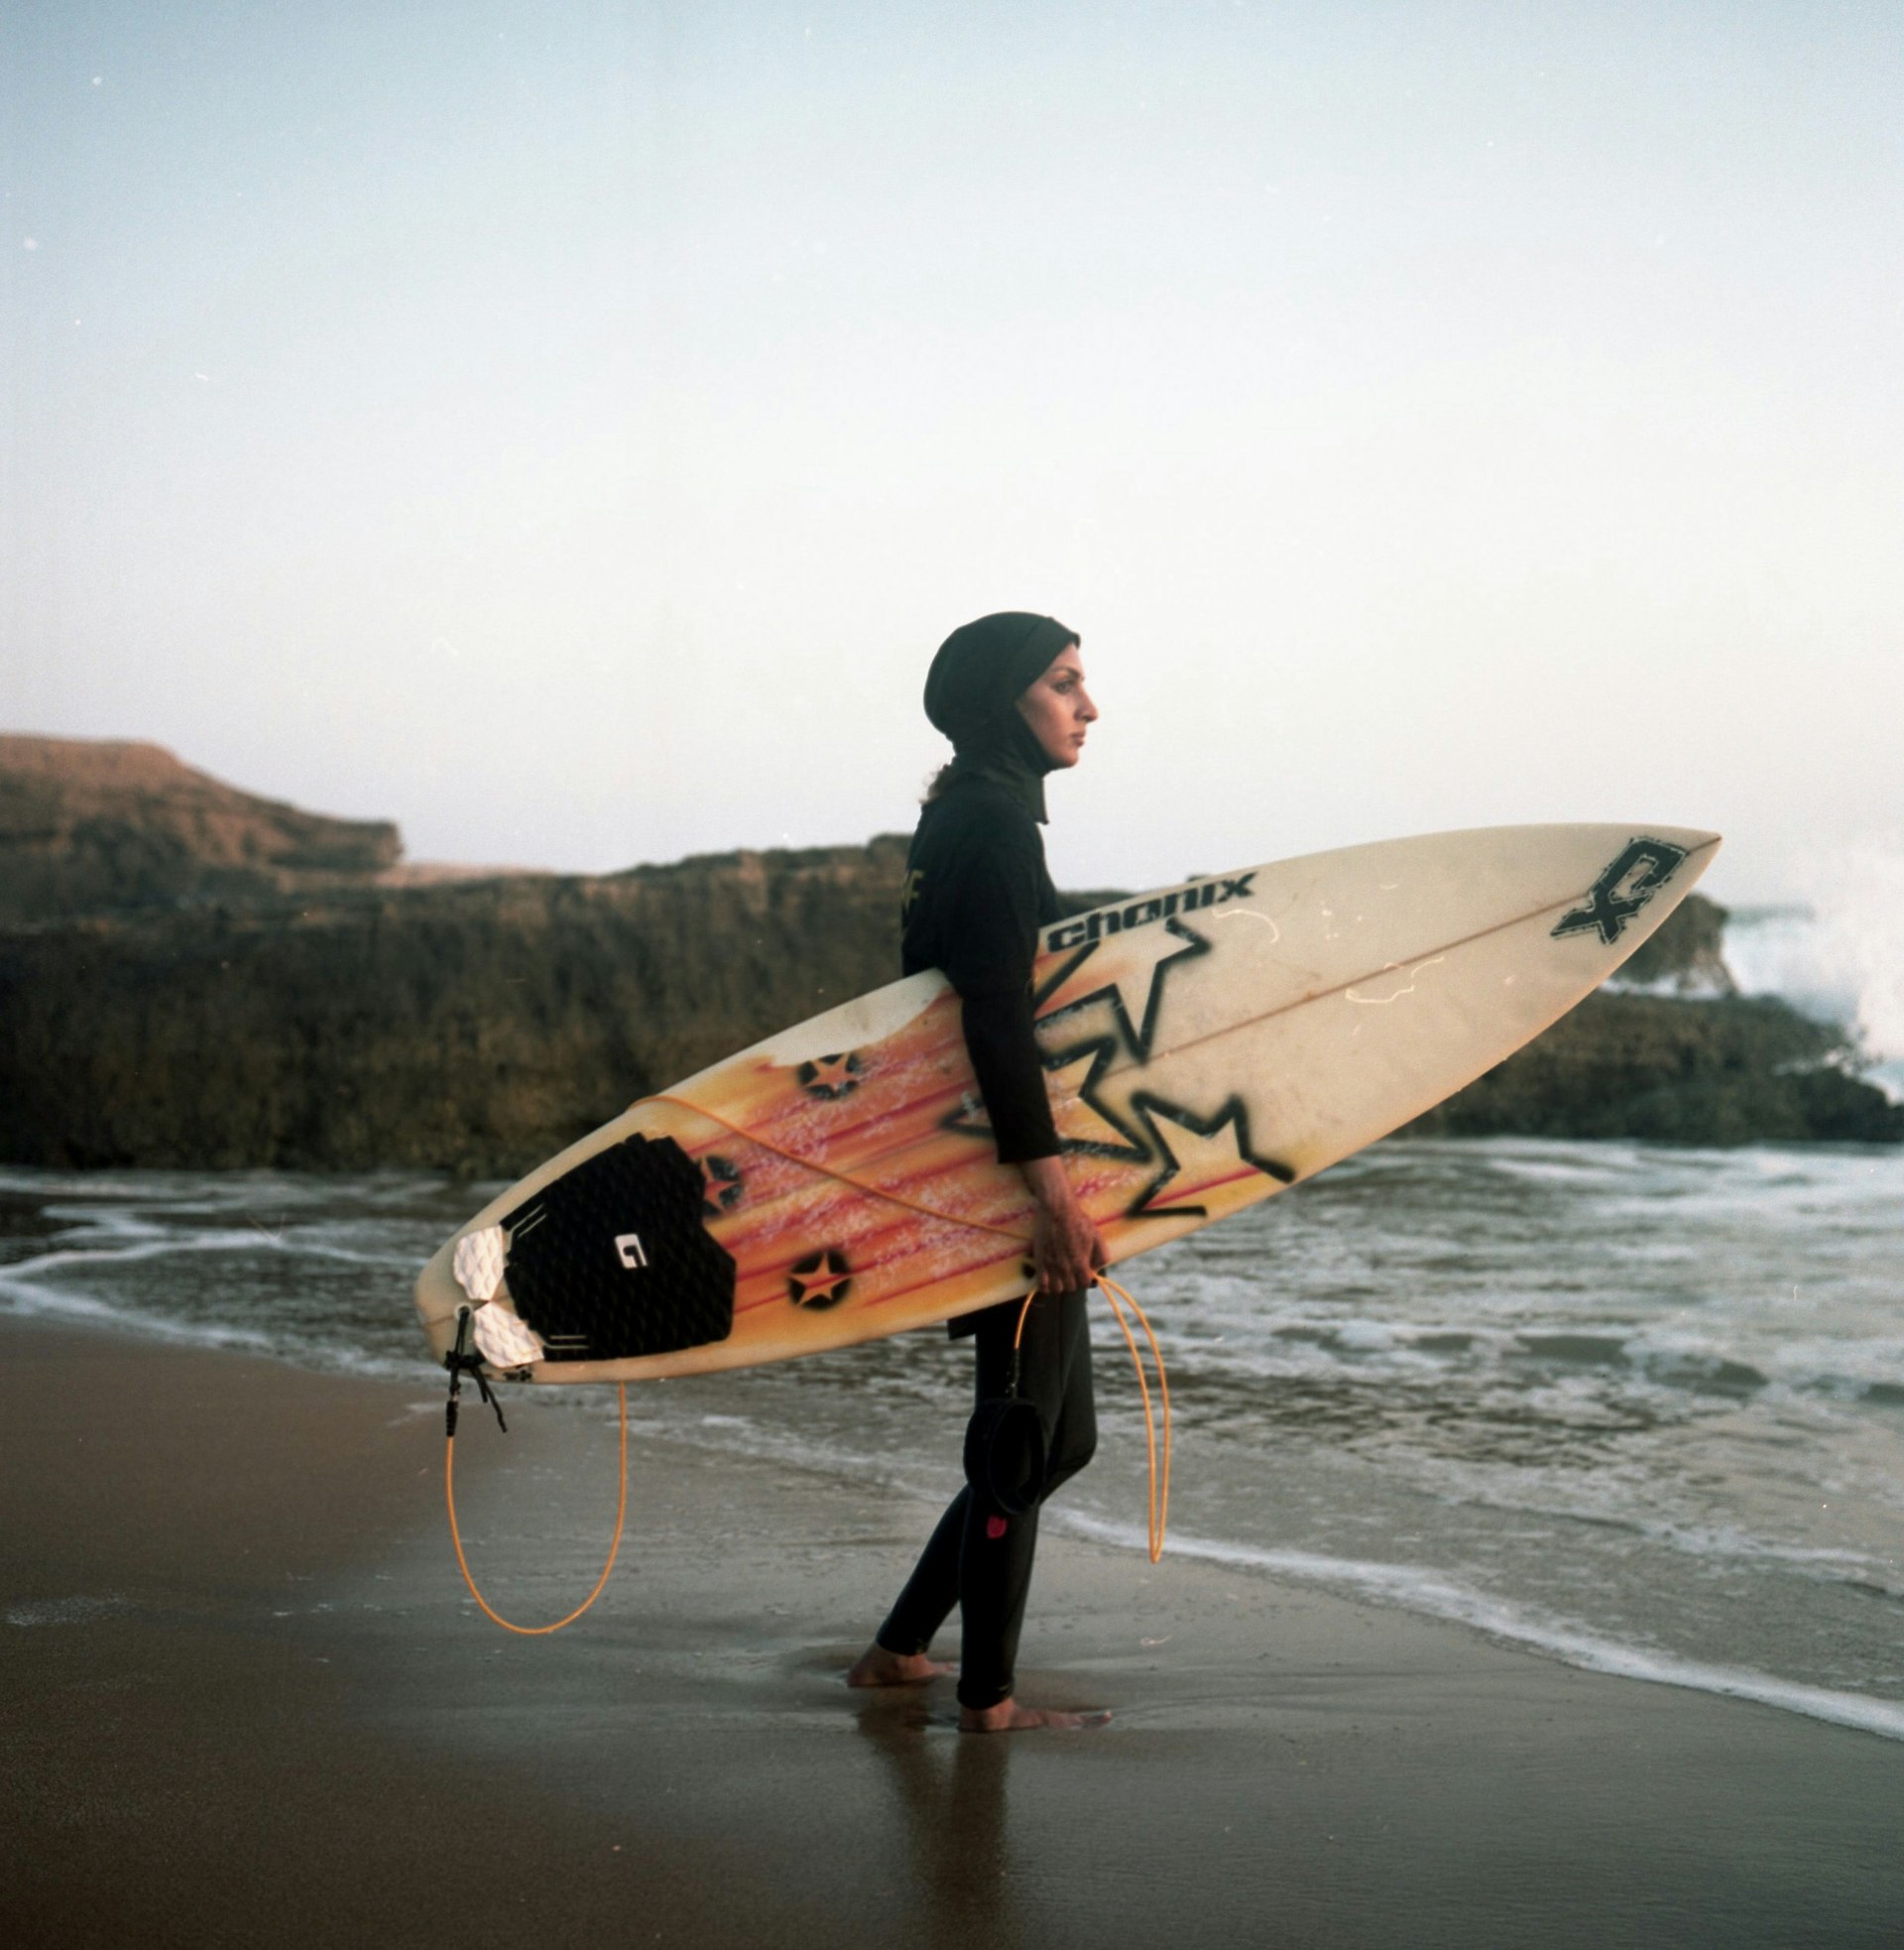 Shahla Yasini is leading a surf revolution in Iran